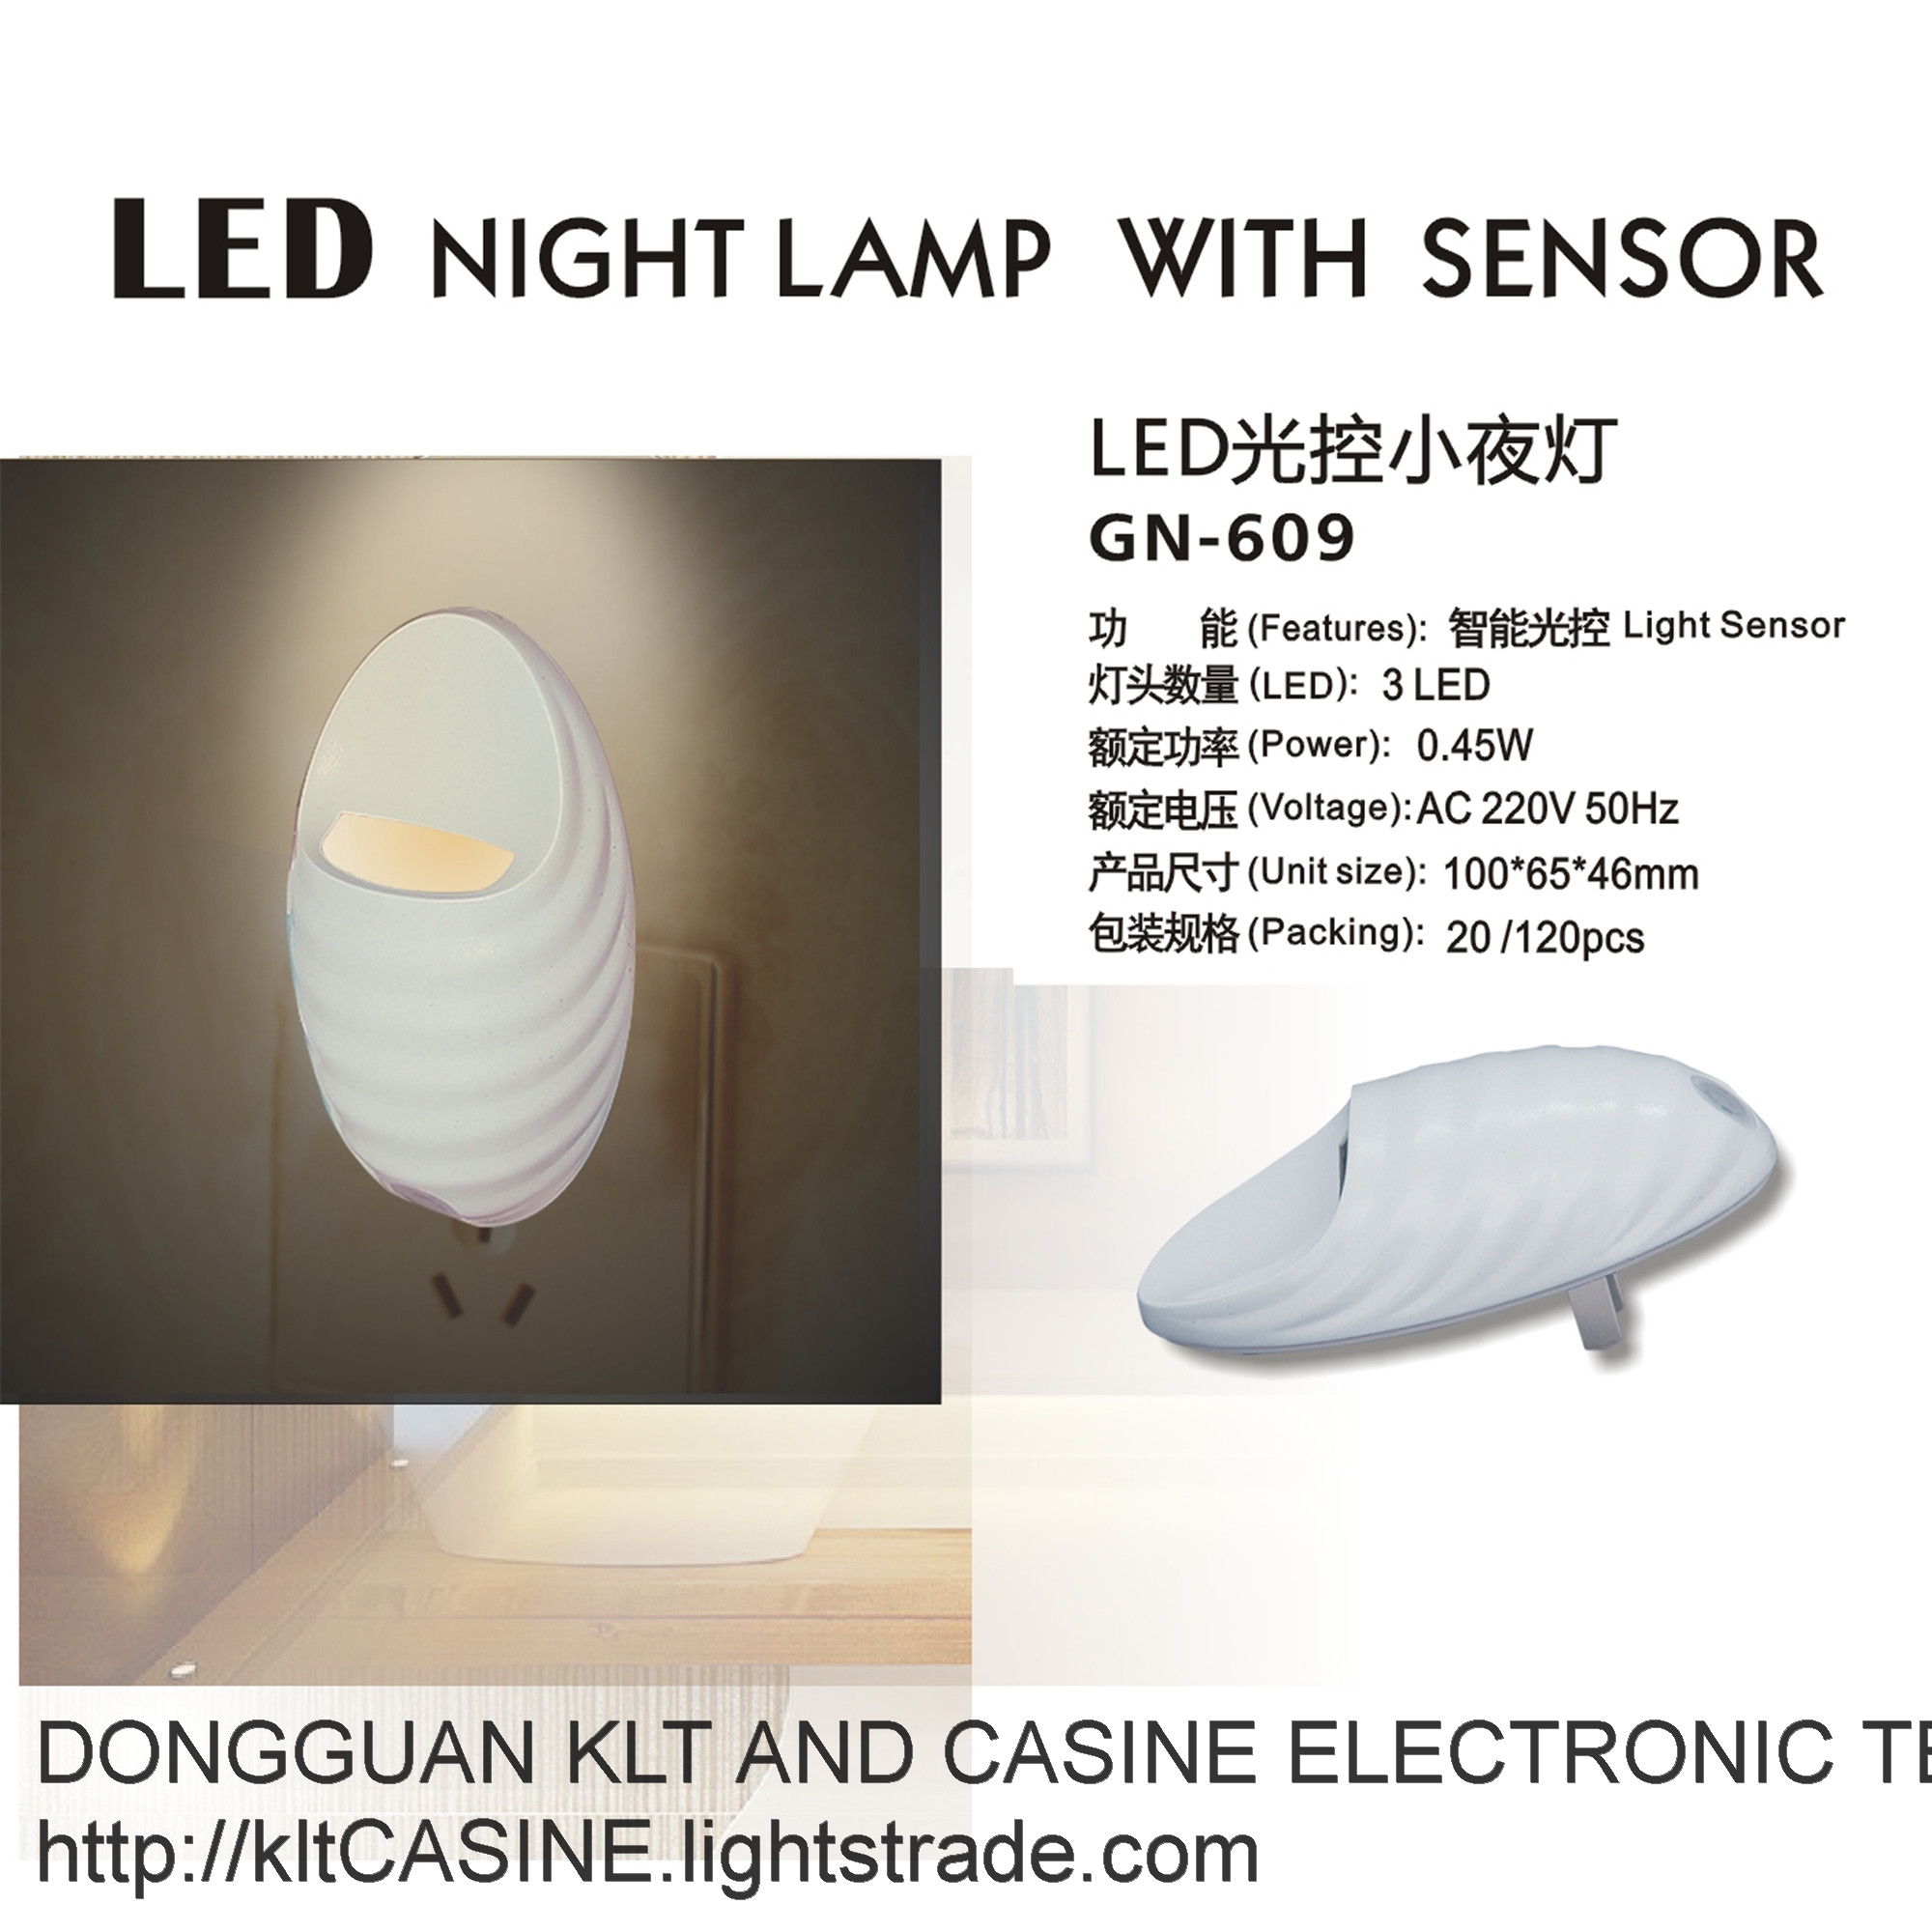 GN-609 LED night light with sensor